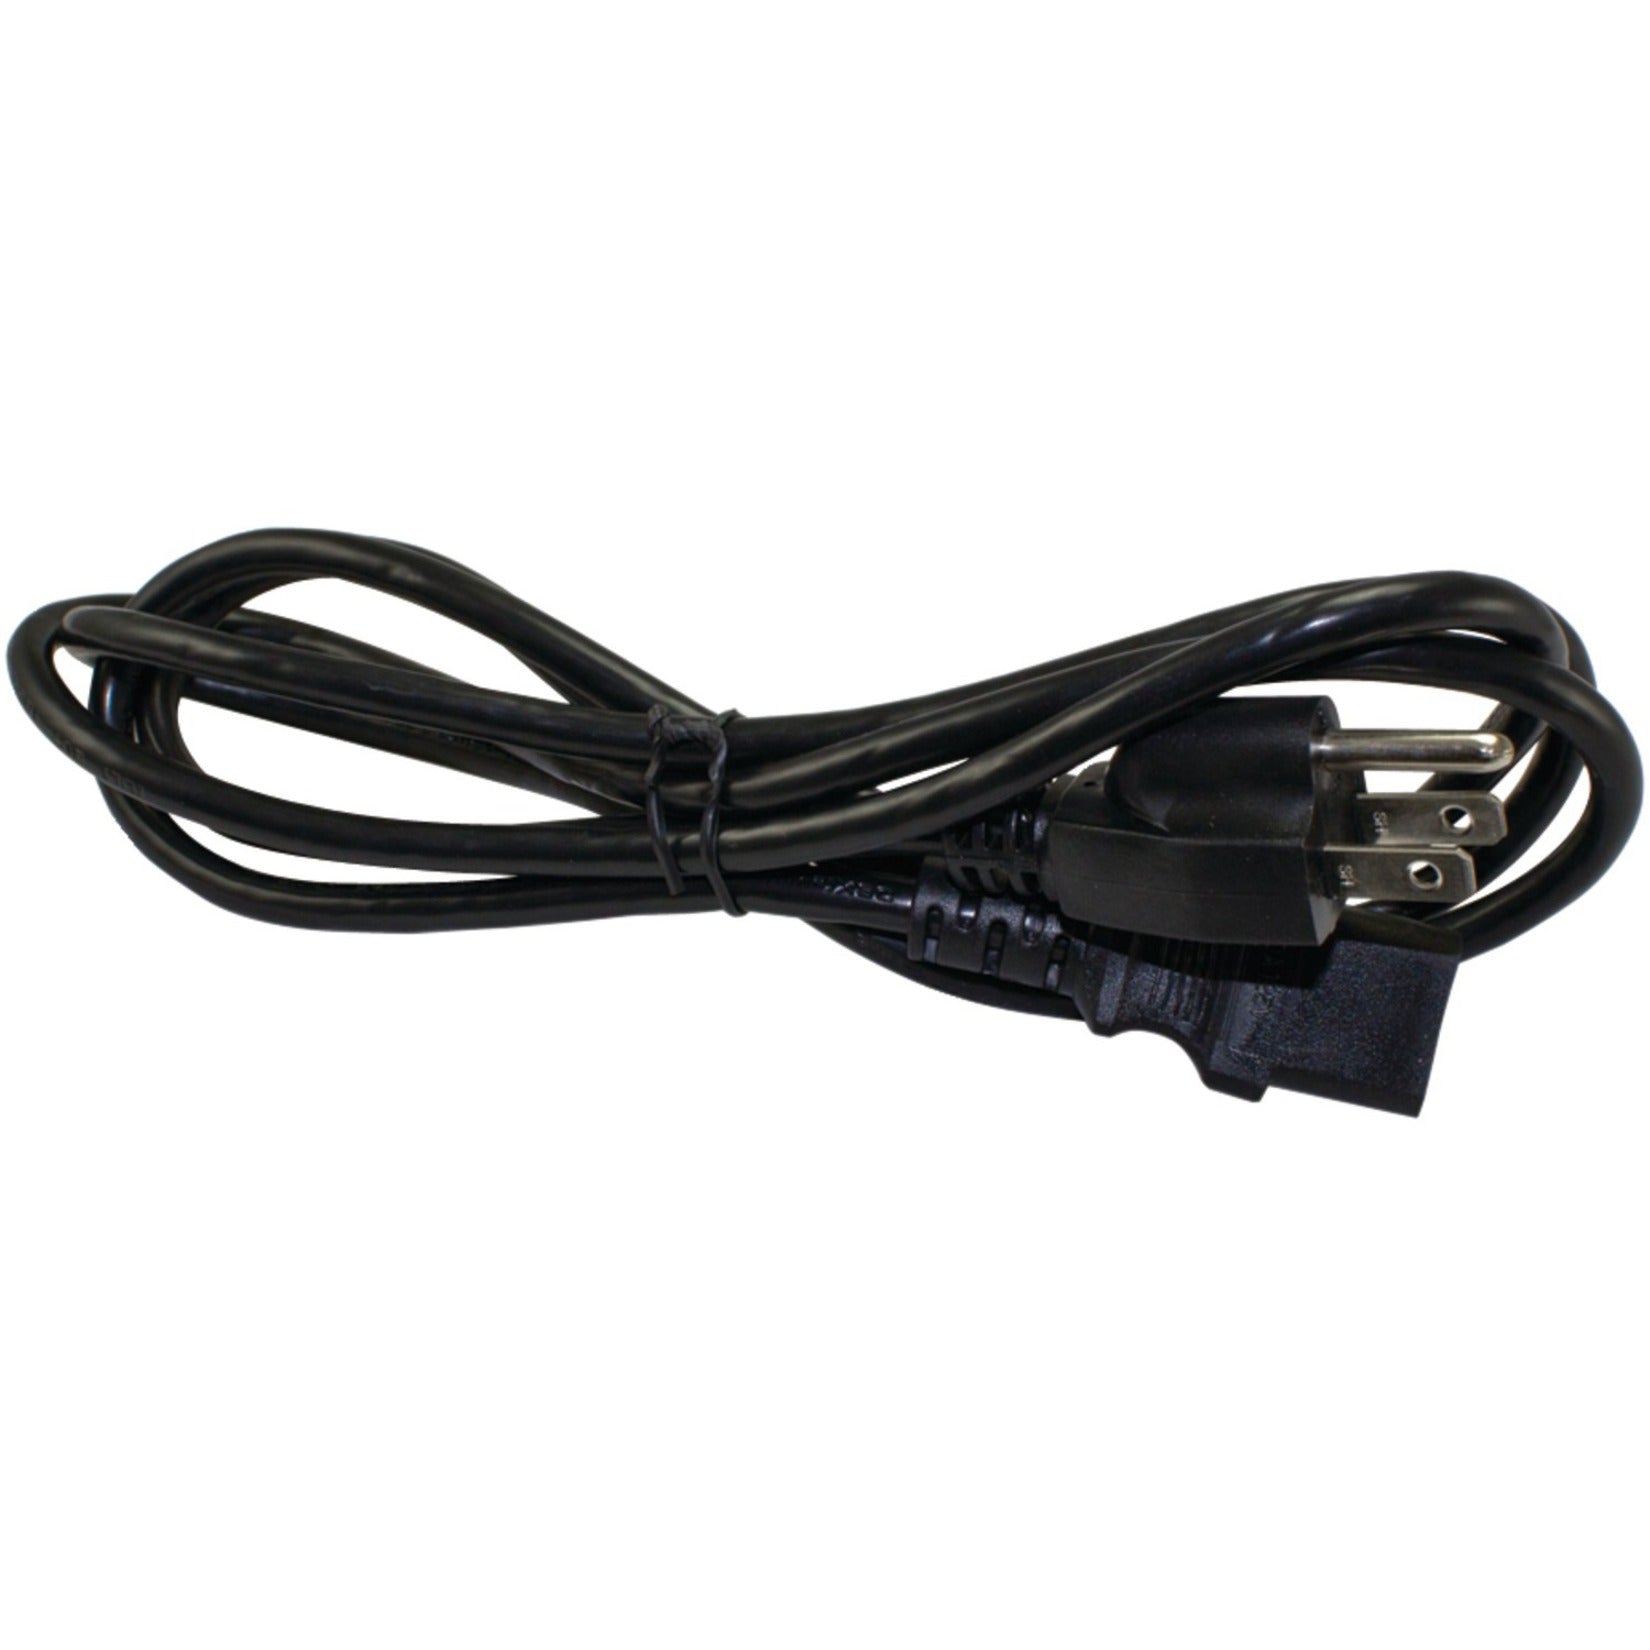 Vericom XPS06-00534 3 Prong C13 Power Cords, Black, 6 ft Length